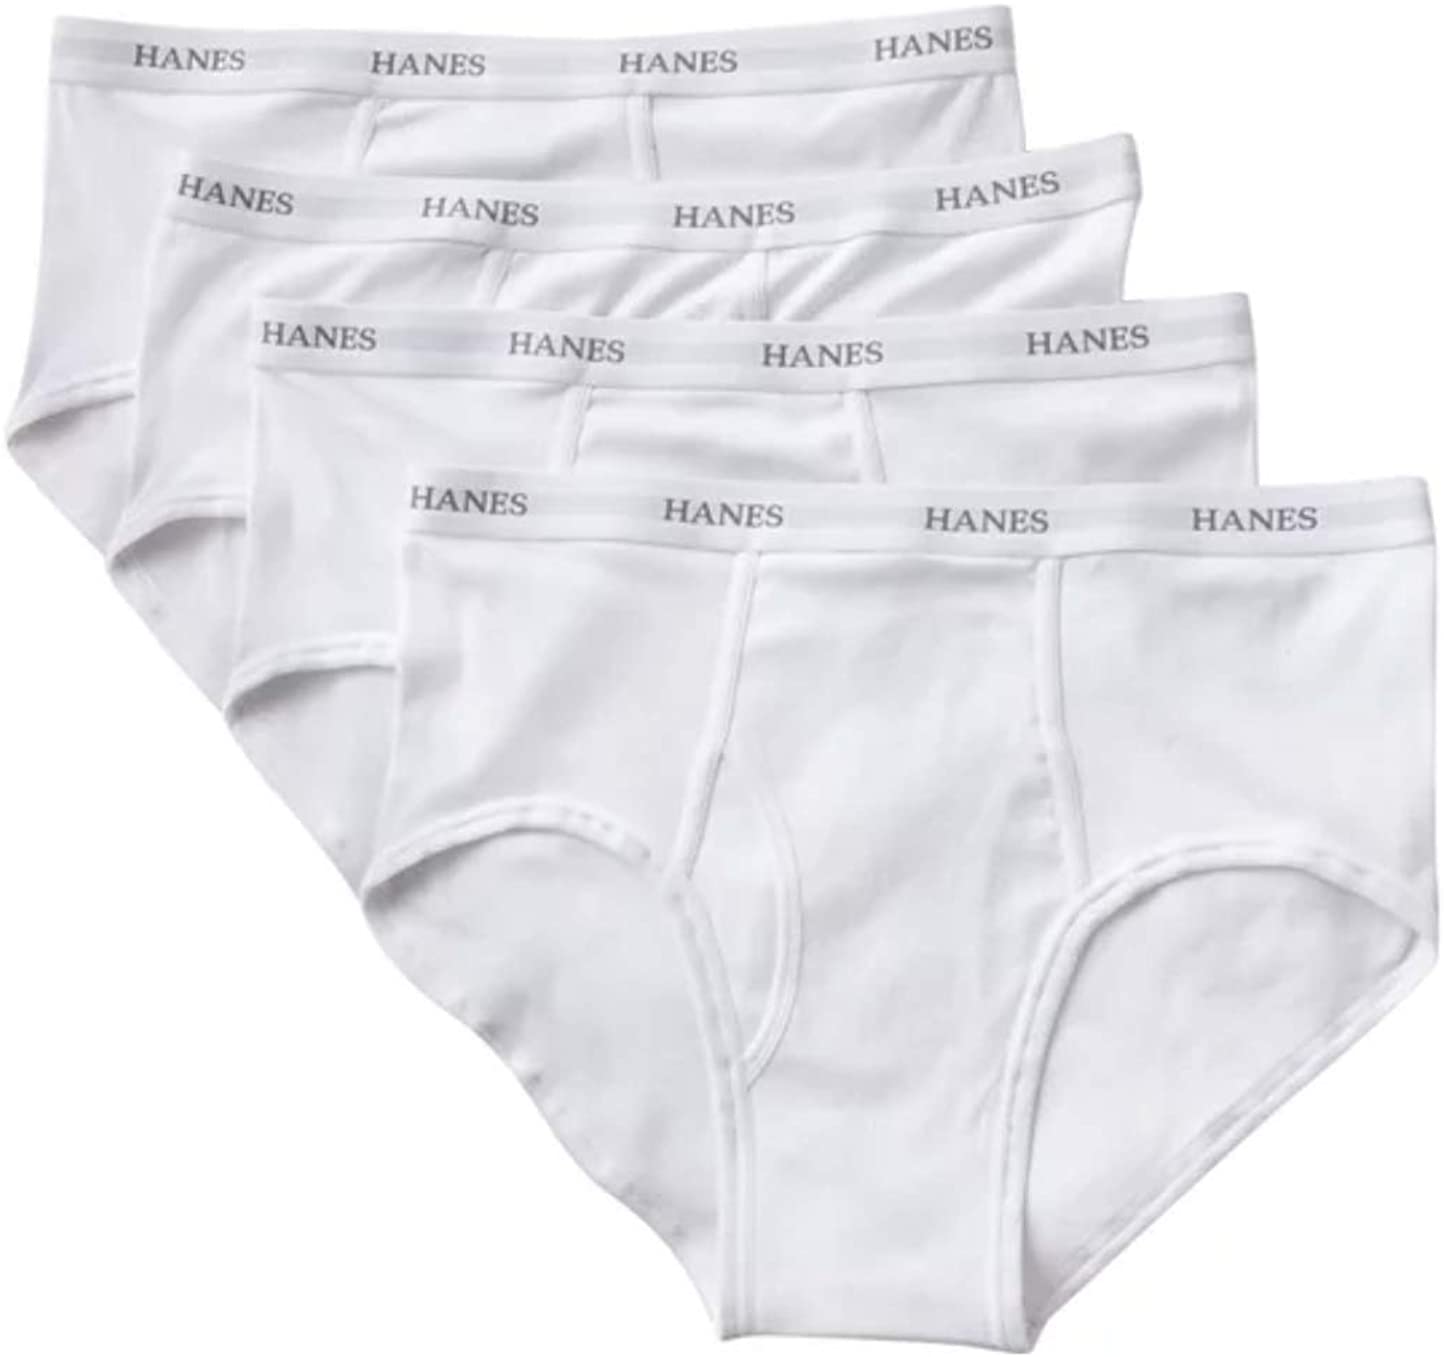 Hanes Men's Big  Tall 4-Pack White Briefs | eBay